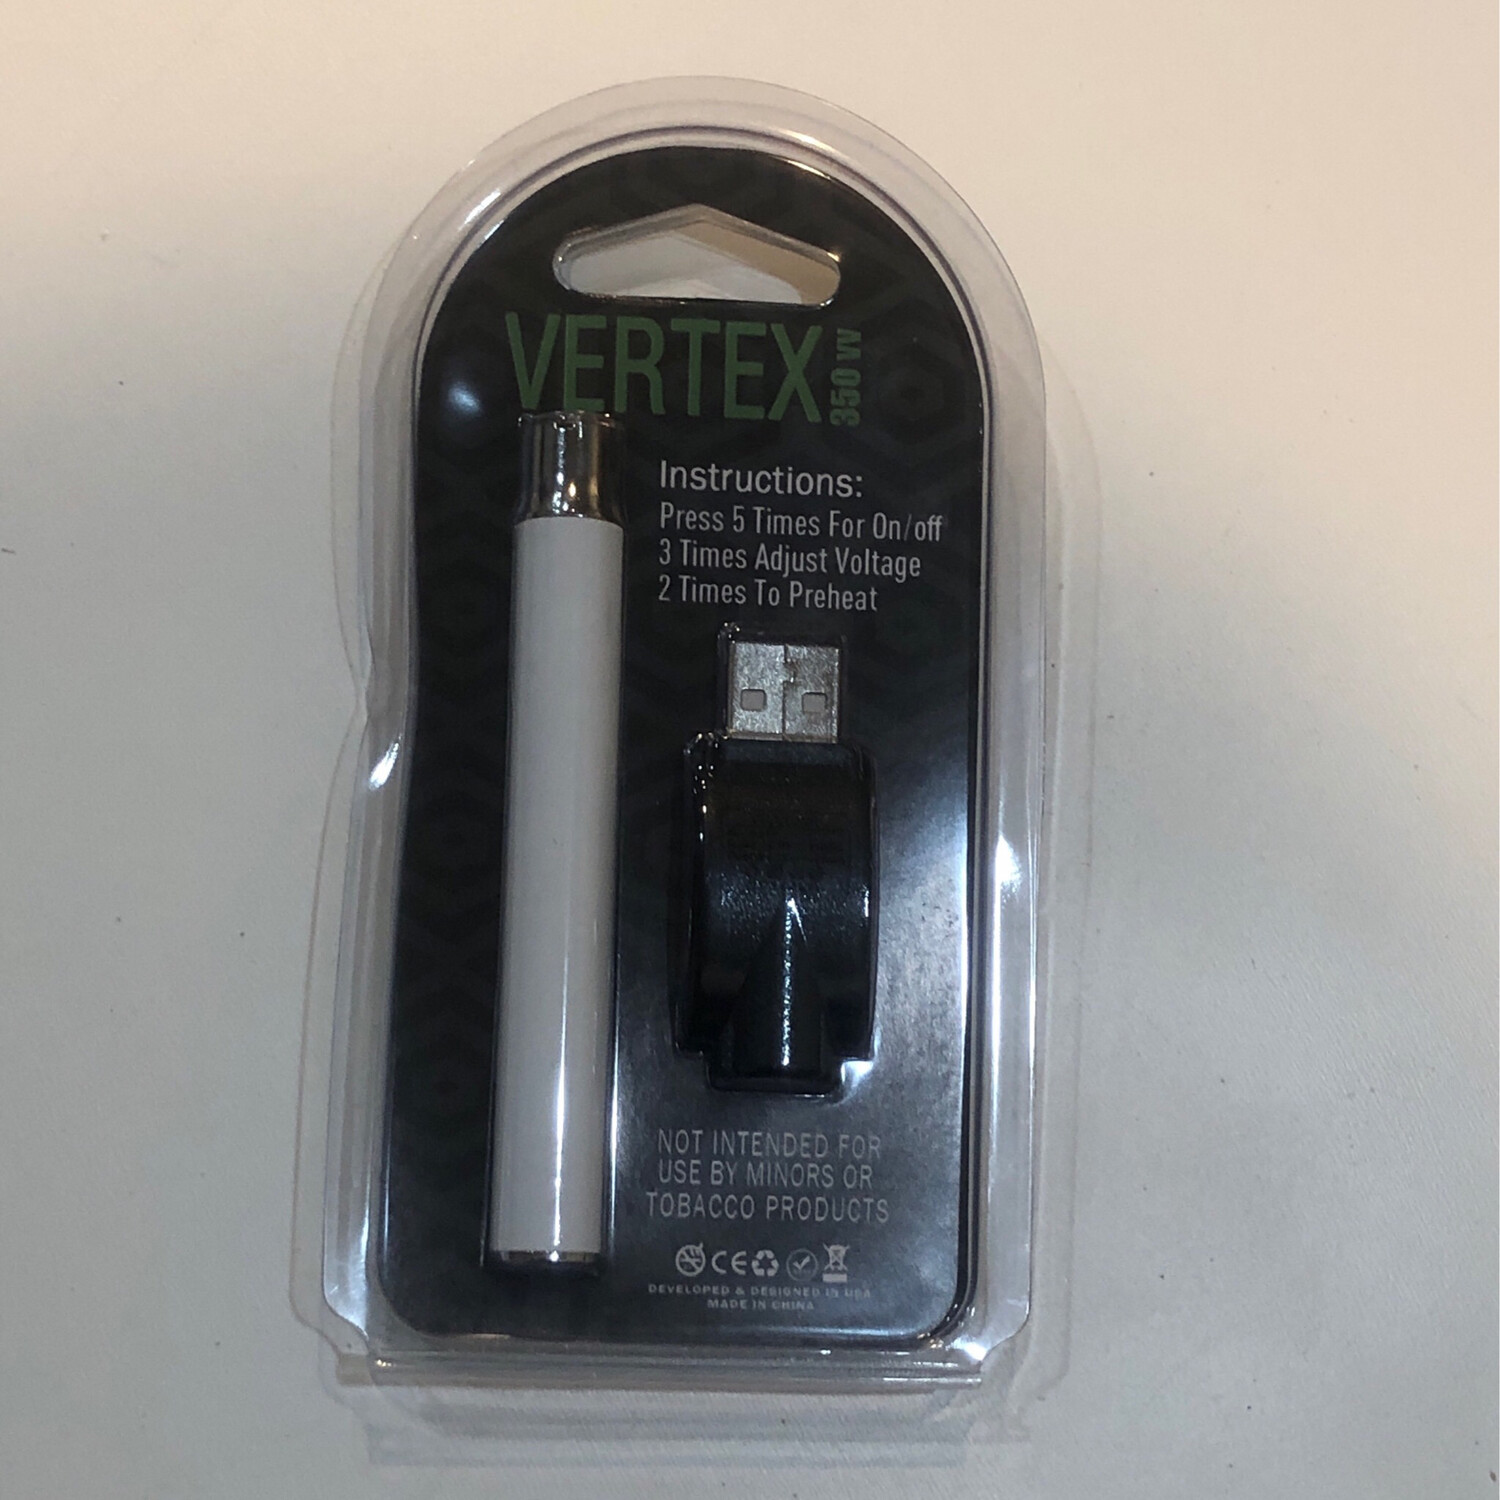 510 Vertex Slim White Battery wz Charger 3level Voltage Preheat Options